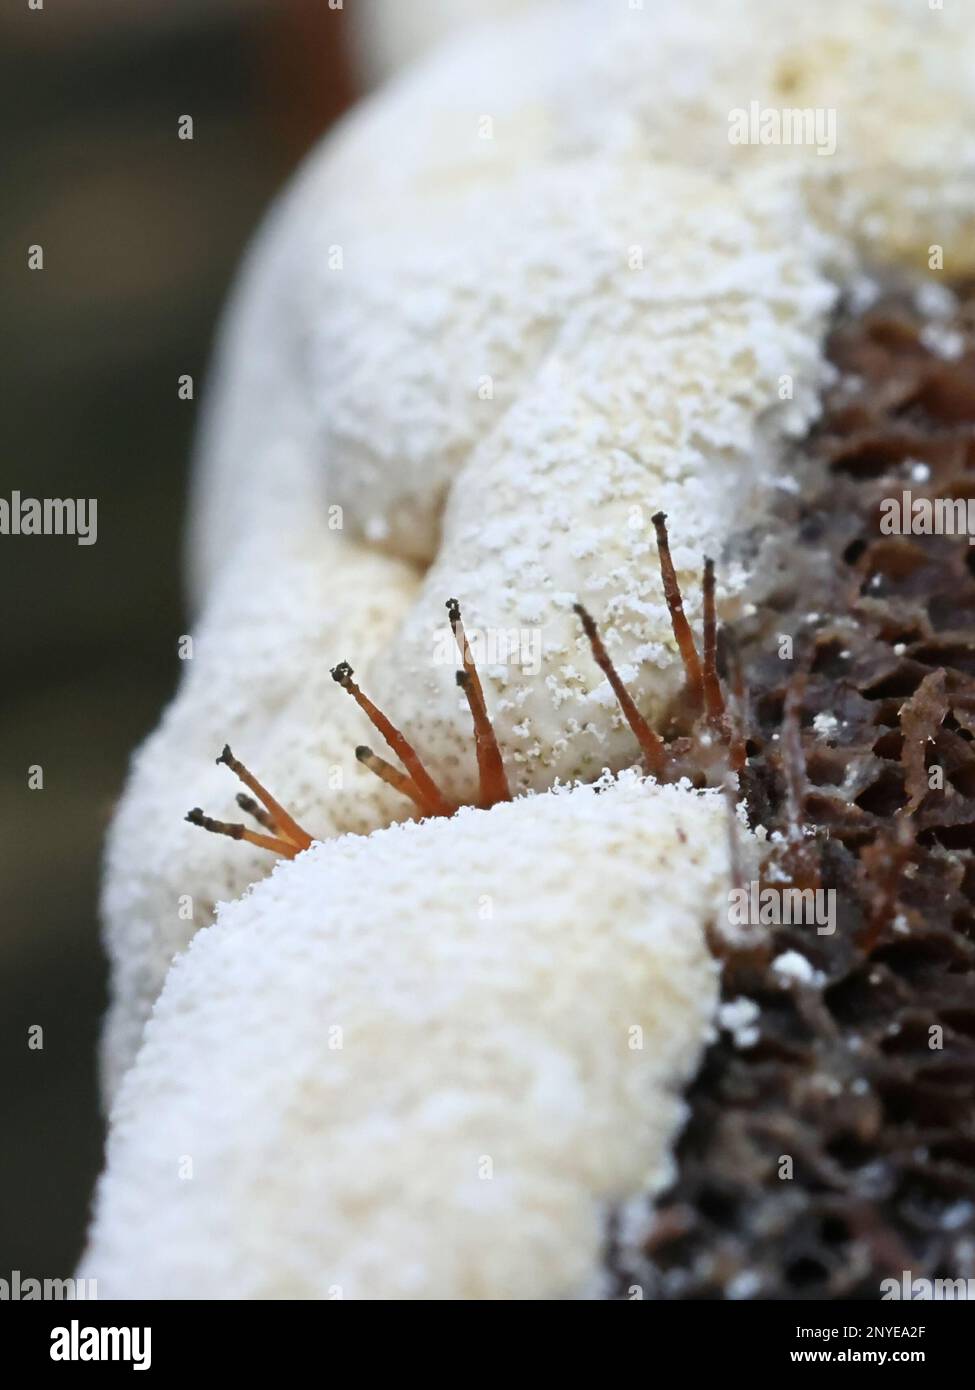 Melanospora lagenaria and Trichoderma pulvinatum growing parasitic on a polypore fungus in Finland Stock Photo